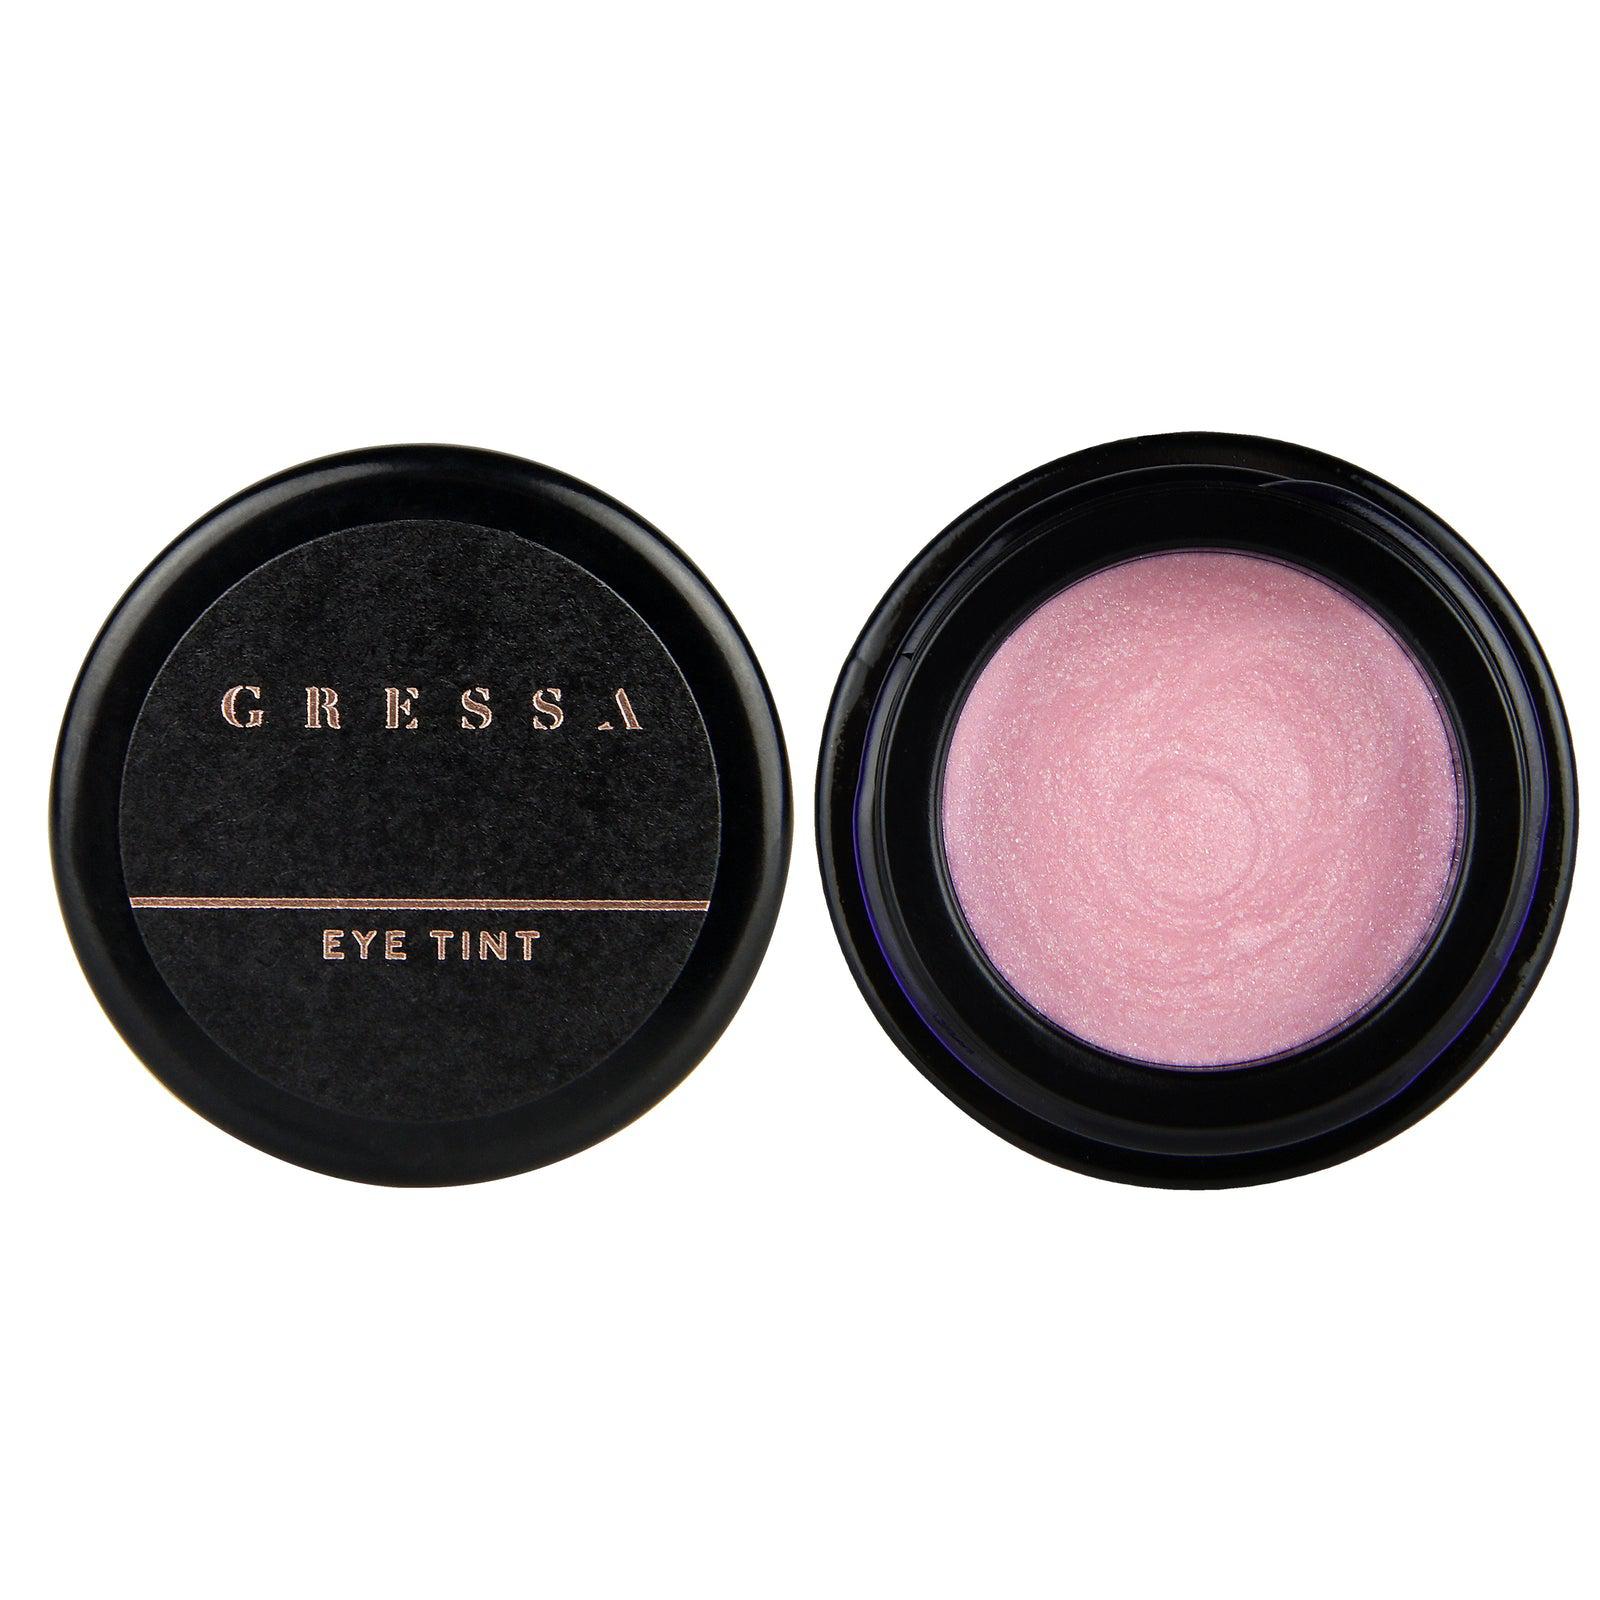 Gressa - Eye Tint - The Bare Theory